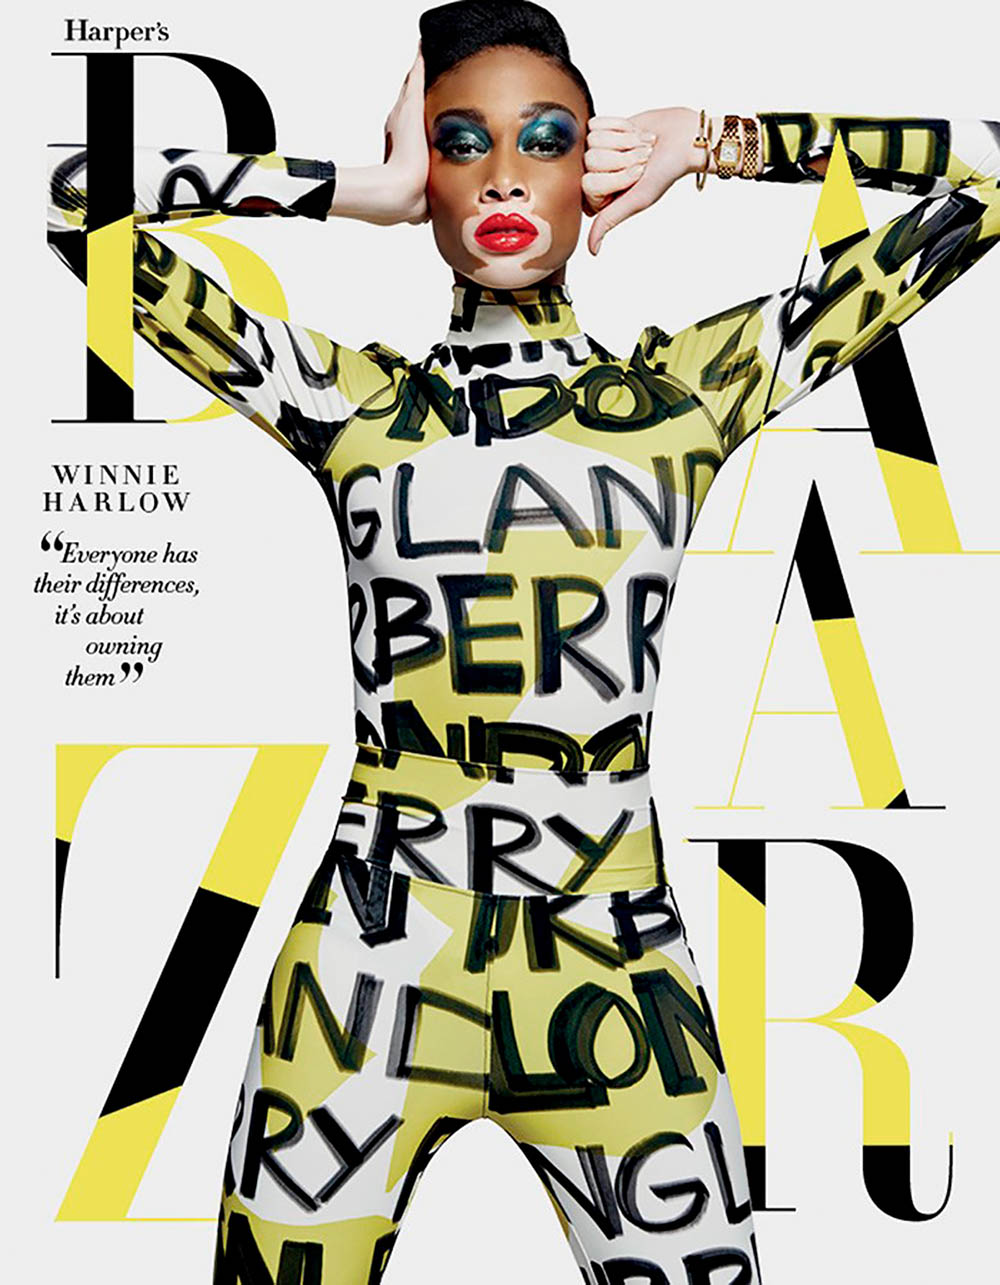 Winnie Harlow covers Harper’s Bazaar Singapore May 2018 by Yu Tsai